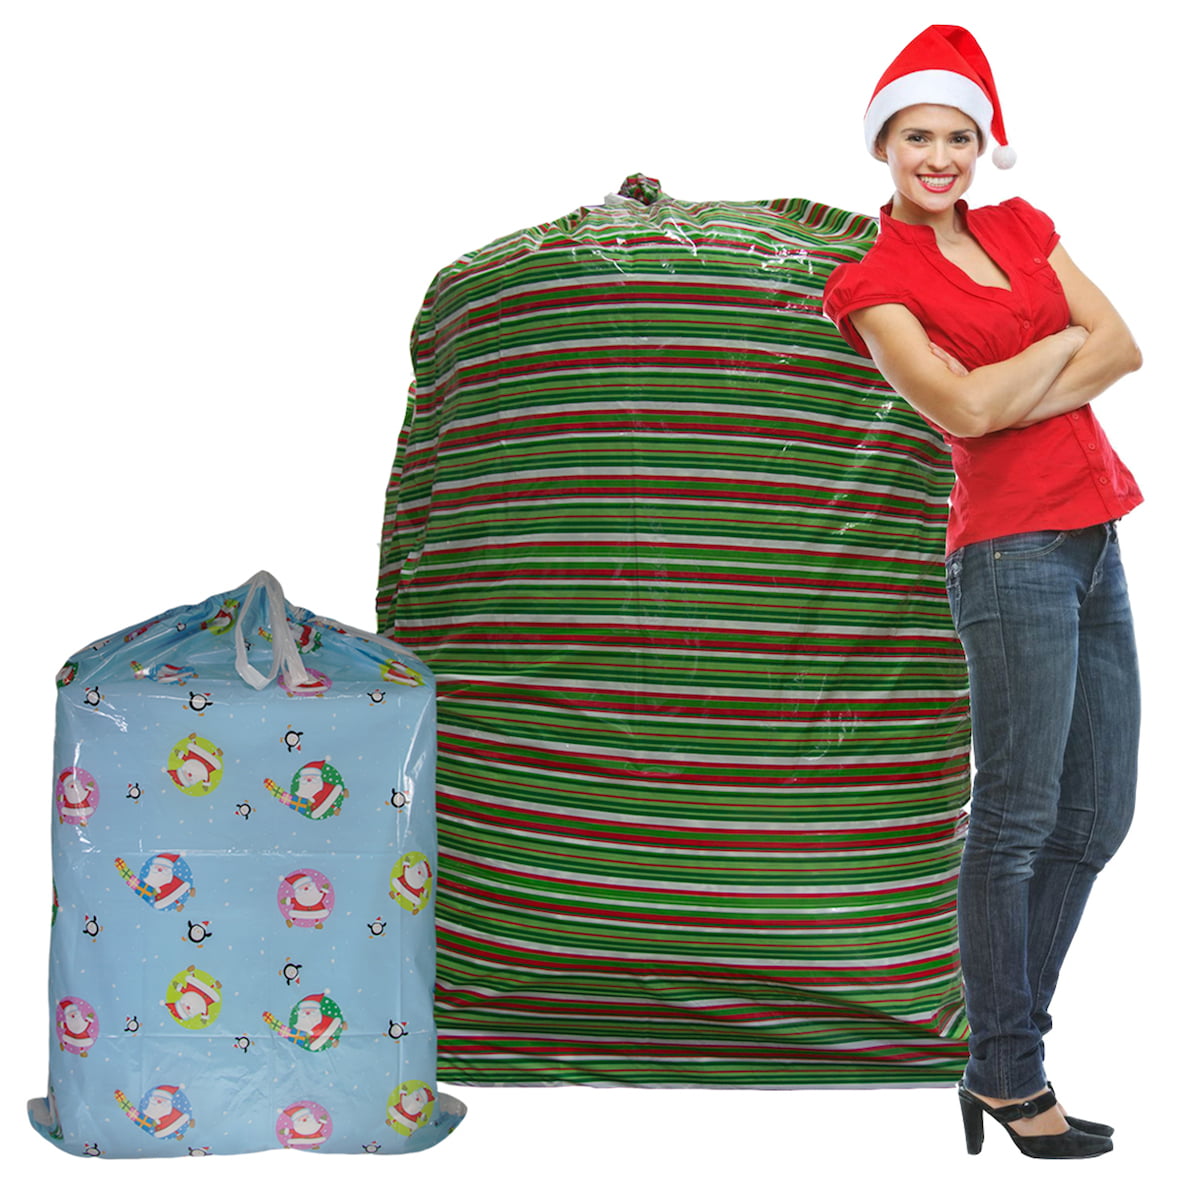 New Christmas House Giant Gift Presents Bag w Tag 36" x 44" ~ Plaid Qty 1 